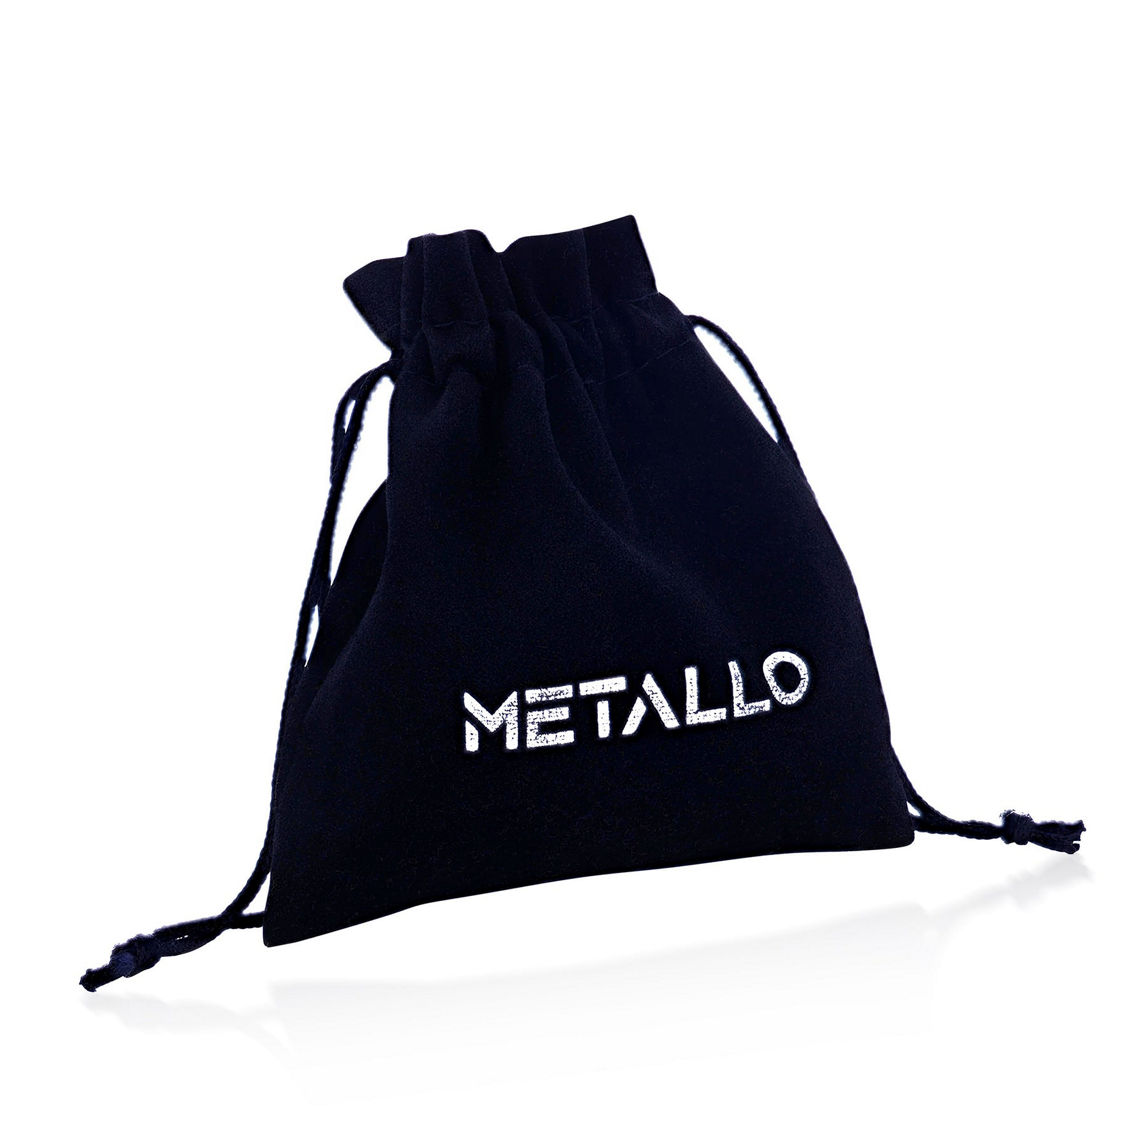 Metallo Stainless Steel Cross Charm Earrings - Black Plated - Image 2 of 2